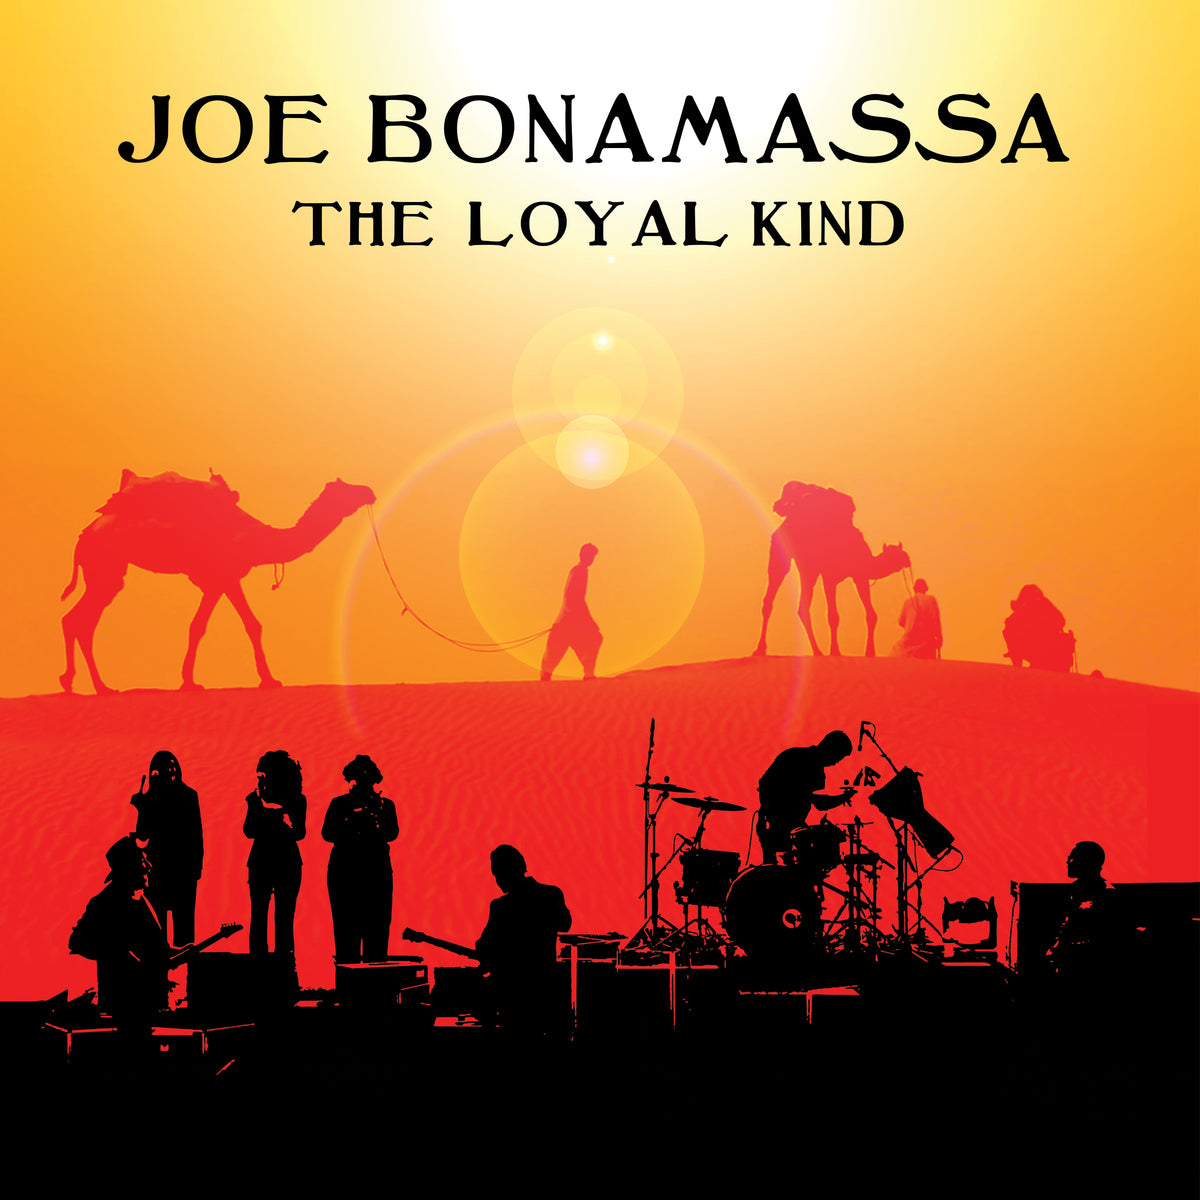 The Loyal Kind - Joe Bonamassa - Single